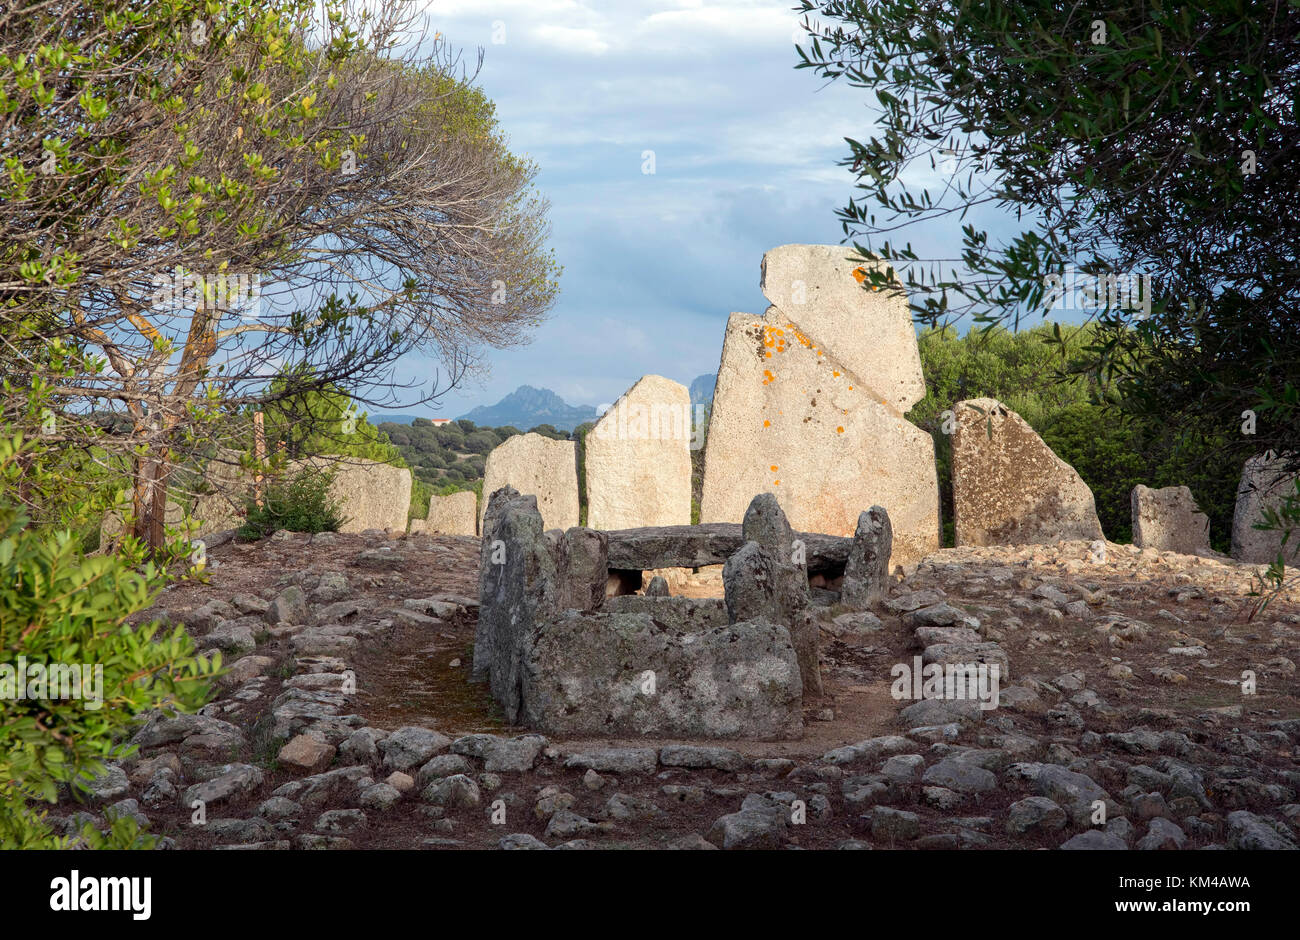 Tomba dei Giganti Li Longhi, Giants' Grave of li longhi, Arcachena, Costa Smeralda, Sardinia, Italy, Europe Stock Photo